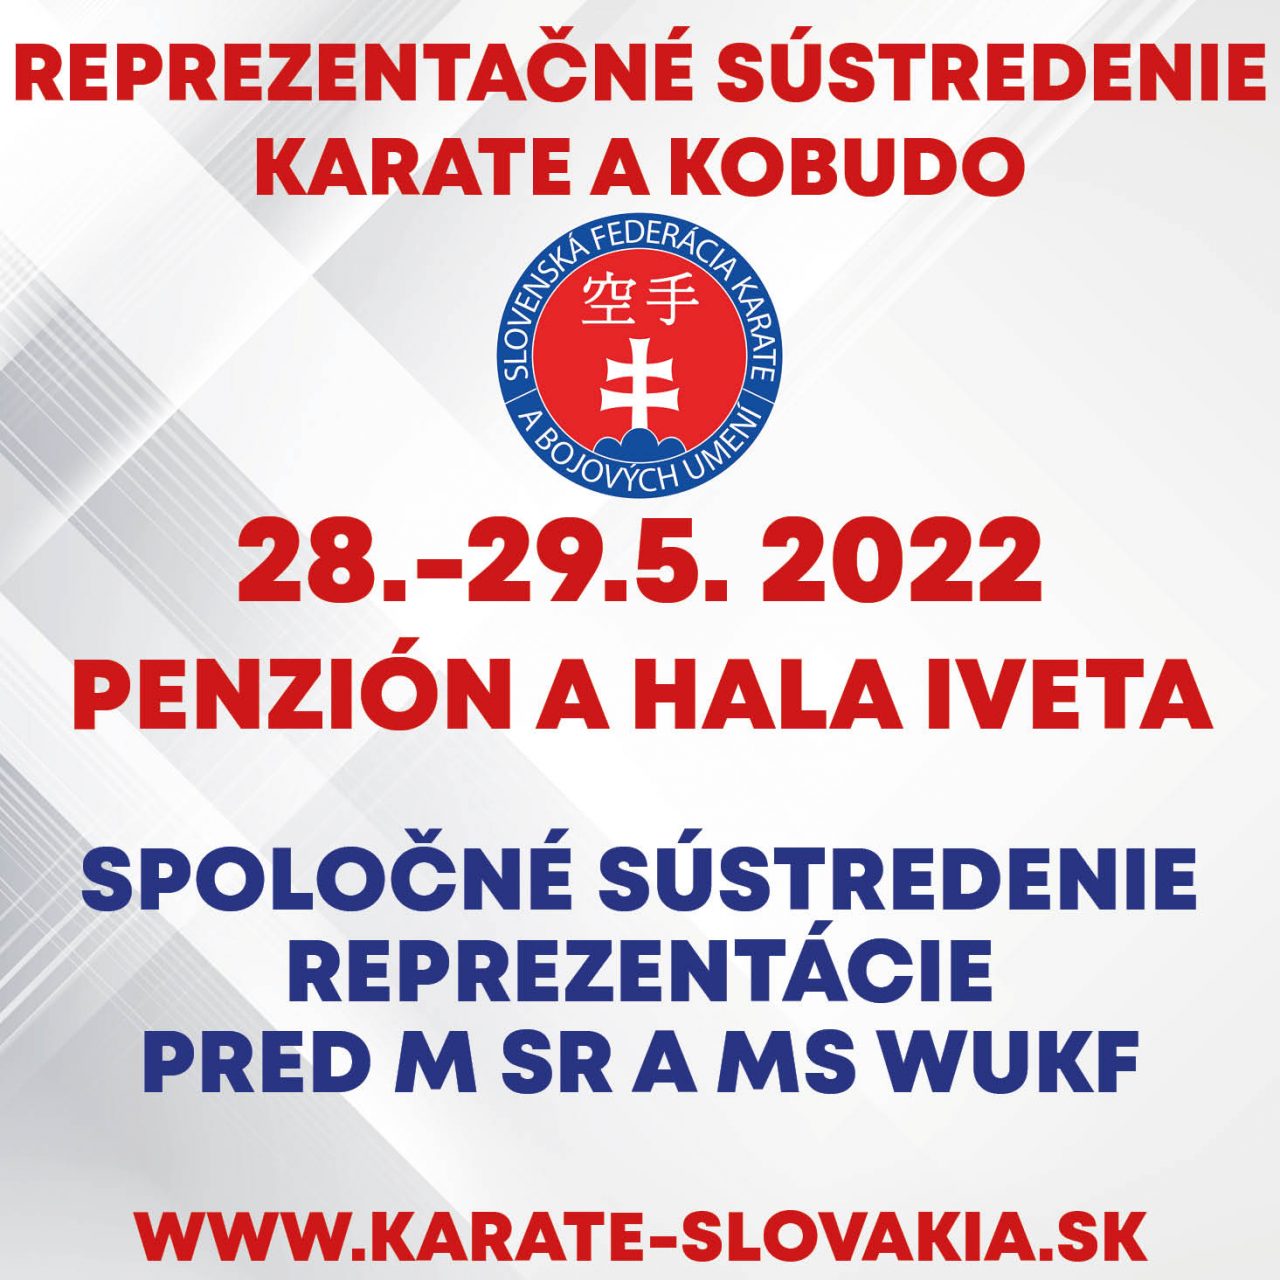 https://karate-slovakia.sk/wp-content/uploads/REPRE_maj_FB-1280x1280.jpg